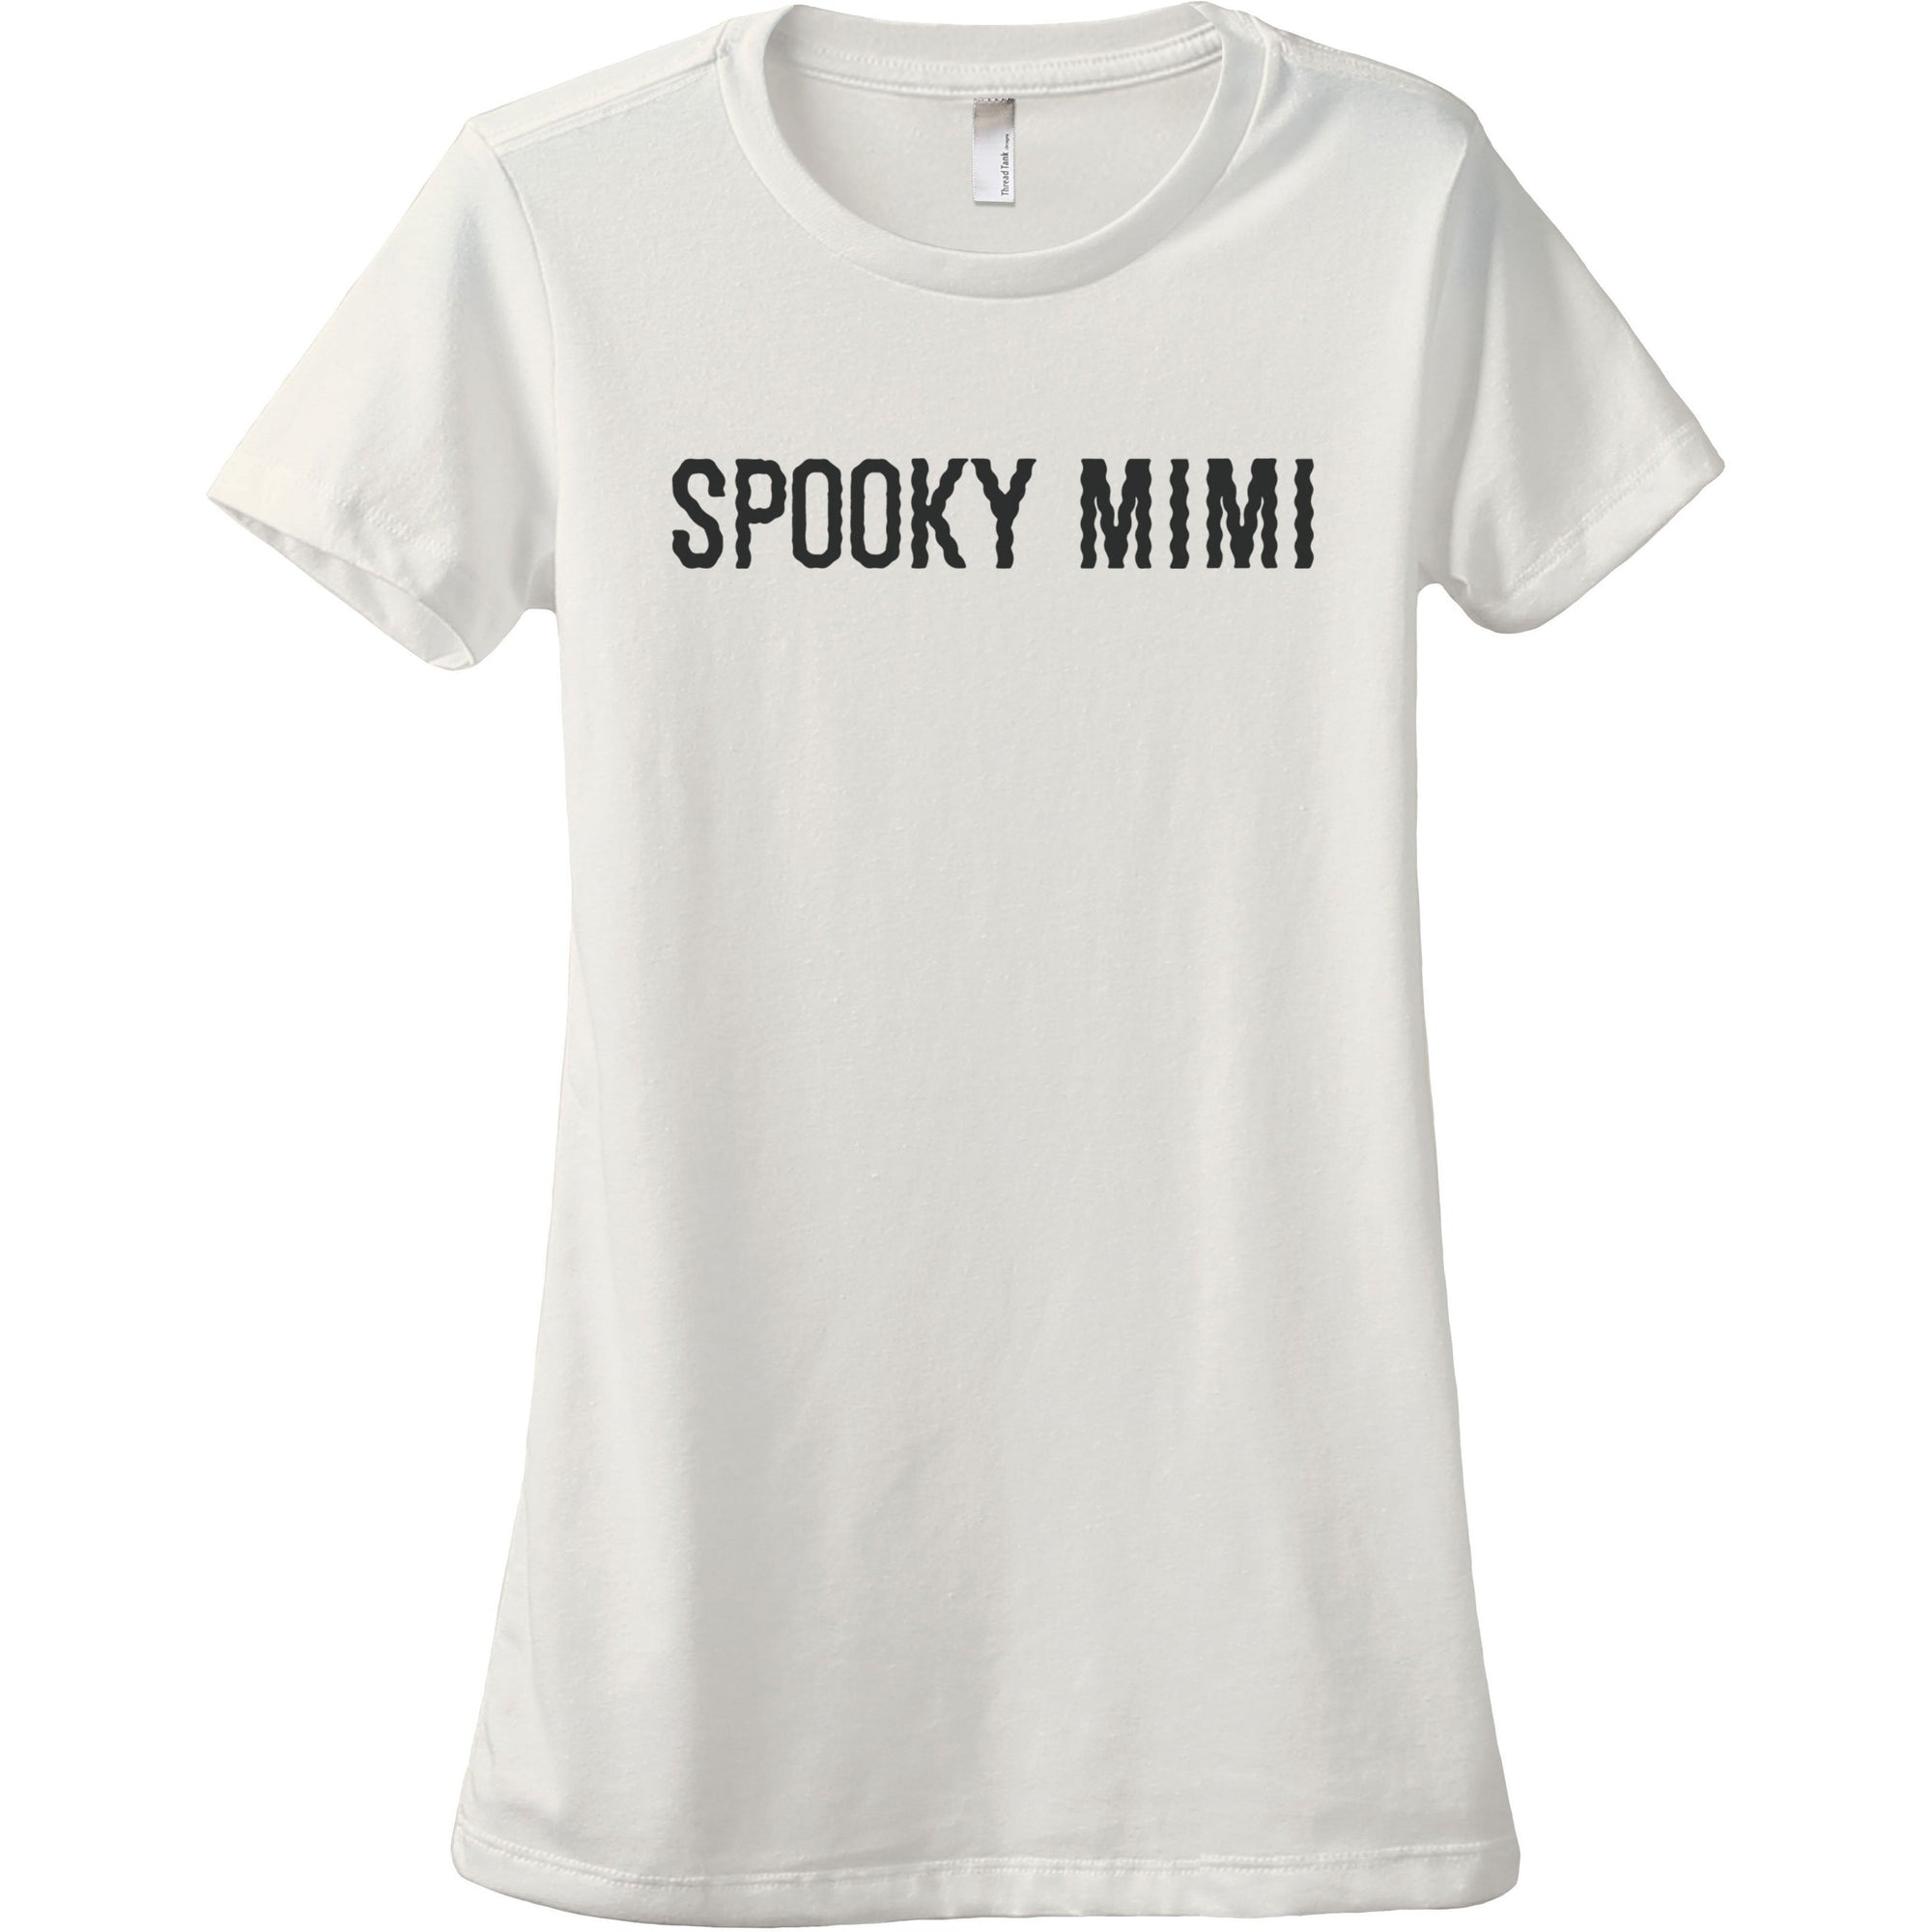 Spooky Mimi - thread tank | Stories you can wear.